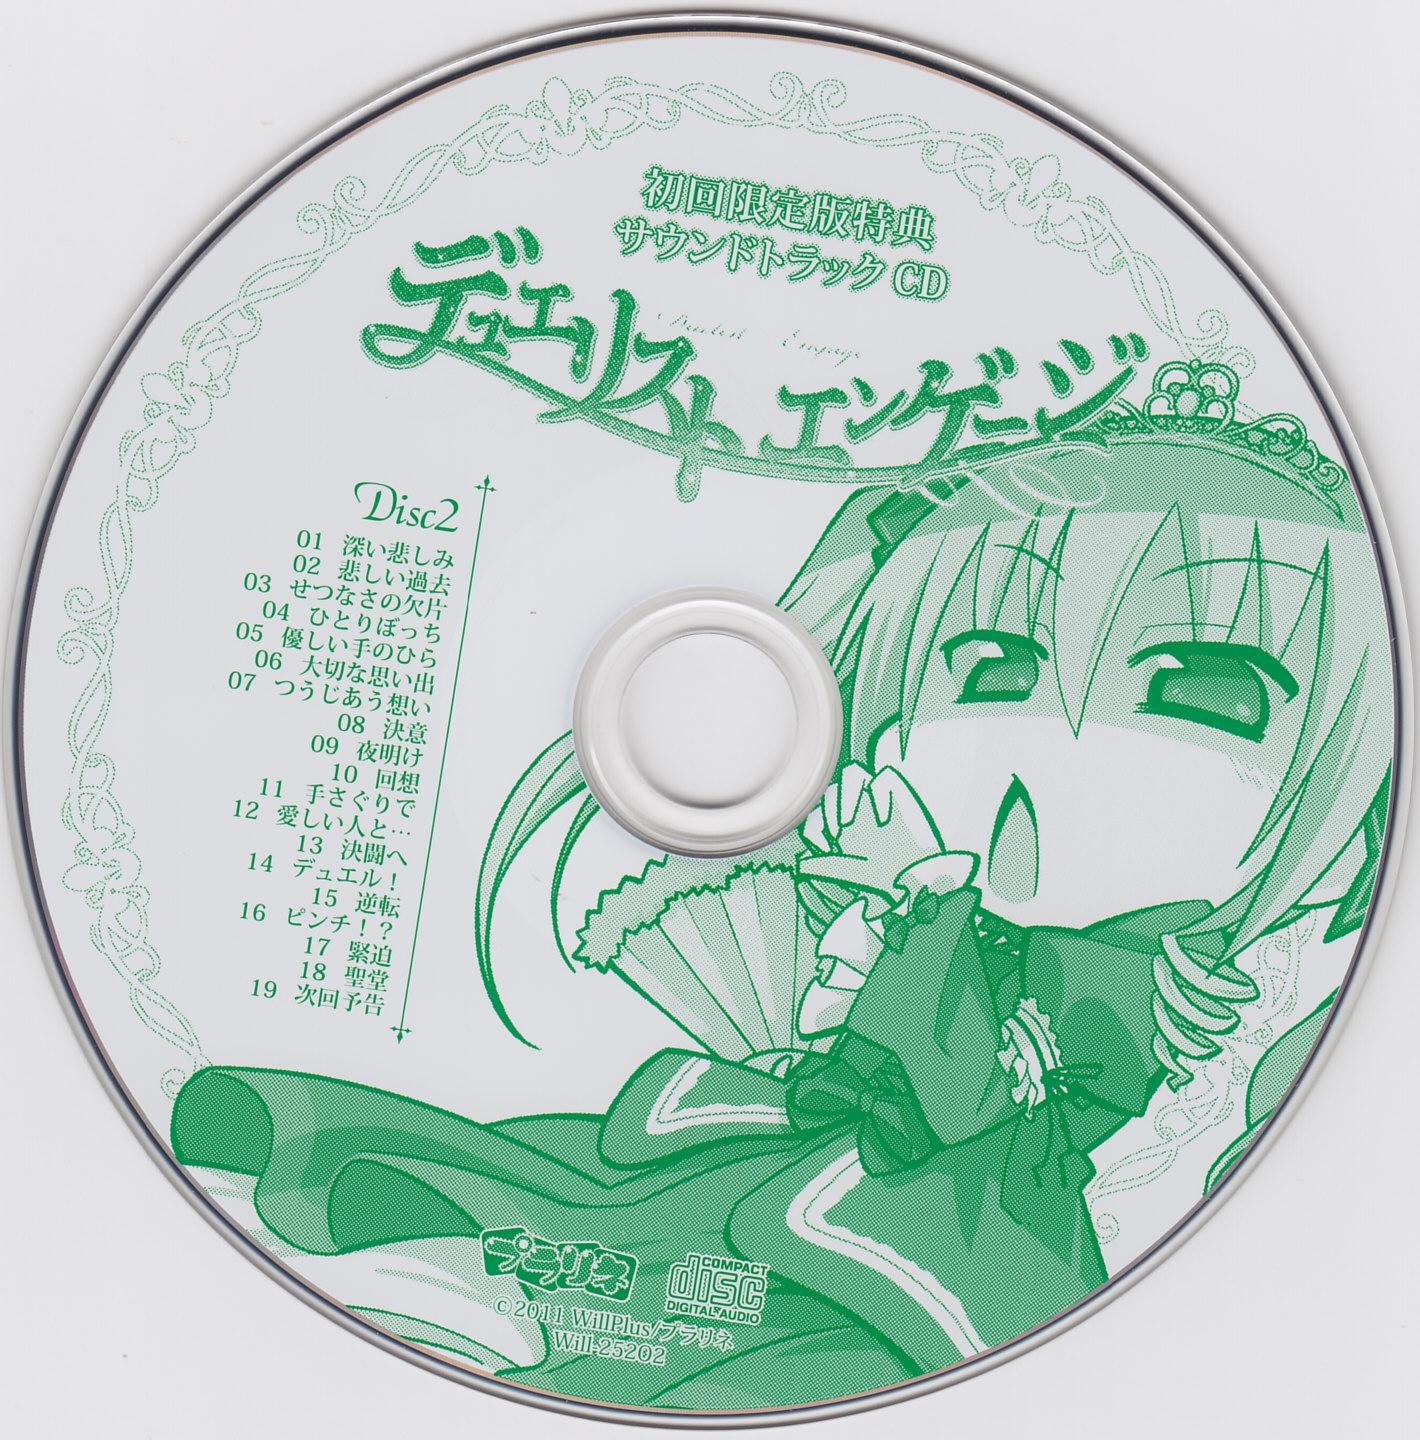 Duelist×Engage Soundtrack CD (2011) MP3 - Download Duelist×Engage  Soundtrack CD (2011) Soundtracks for FREE!